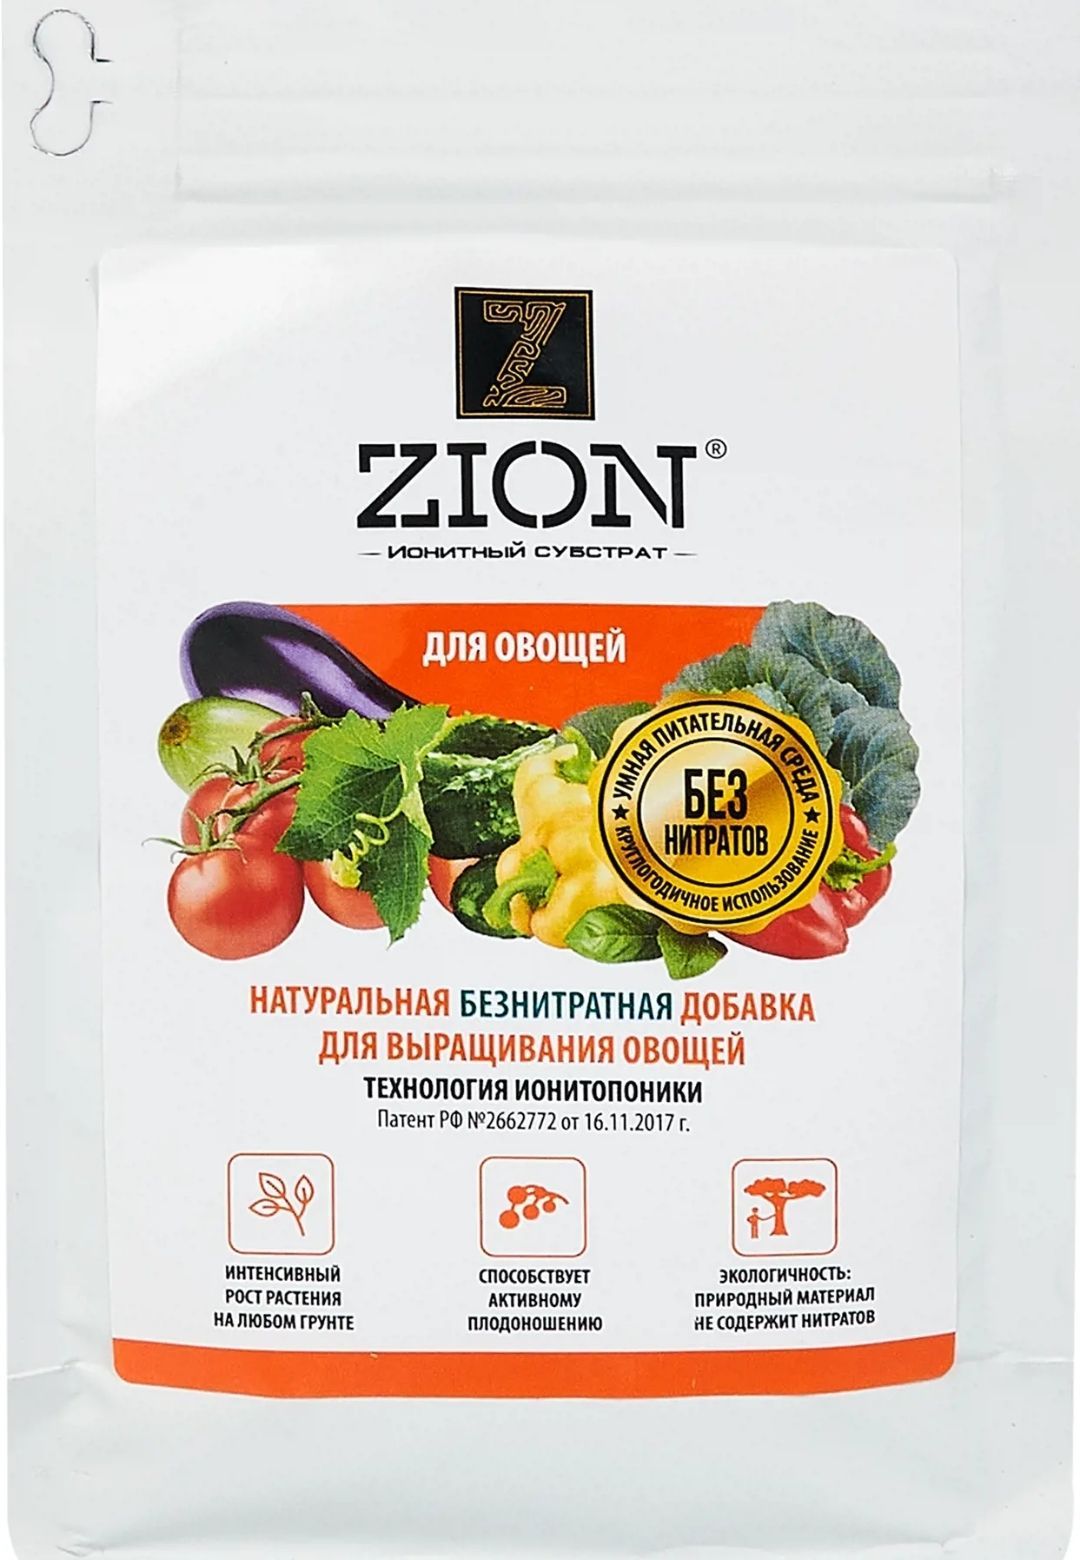 Zion Цион для овощей. Zion для овощей в Леруа Мерлен. Озон удобрение Цион для овощей. Цион для овощей купить.